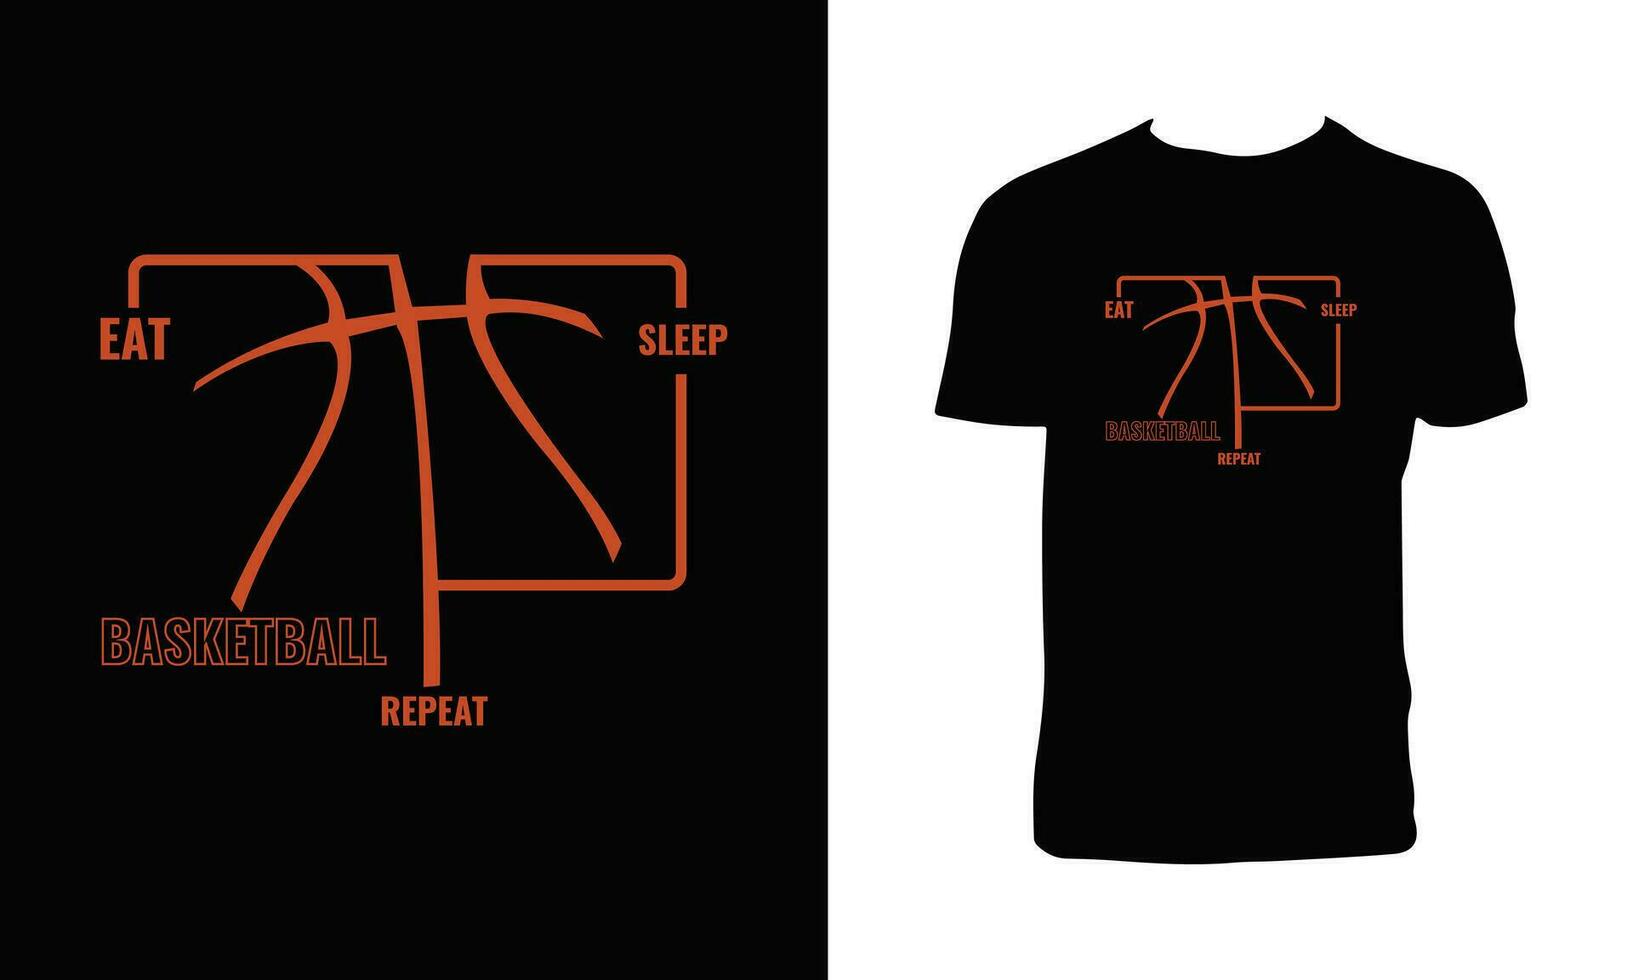 design de camiseta de vetor de basquete